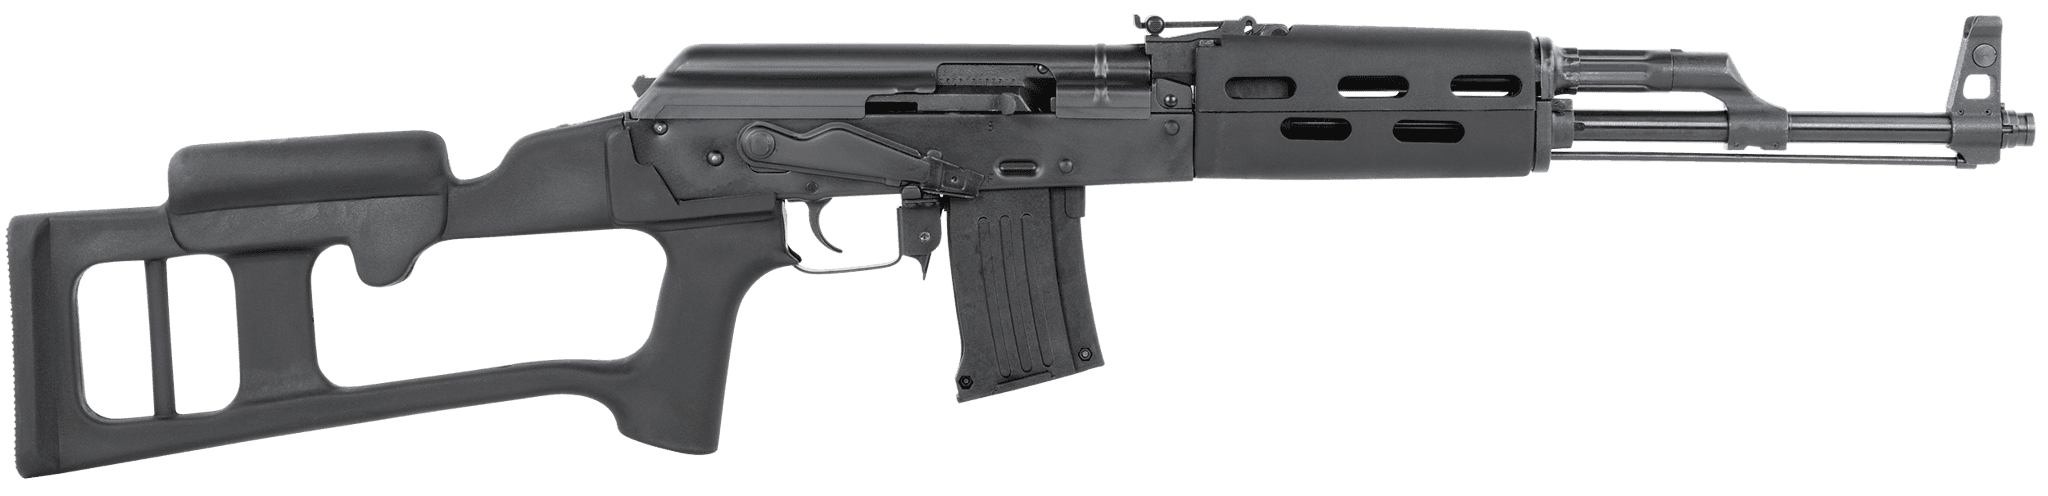 Chiappa Firearms RAK-9